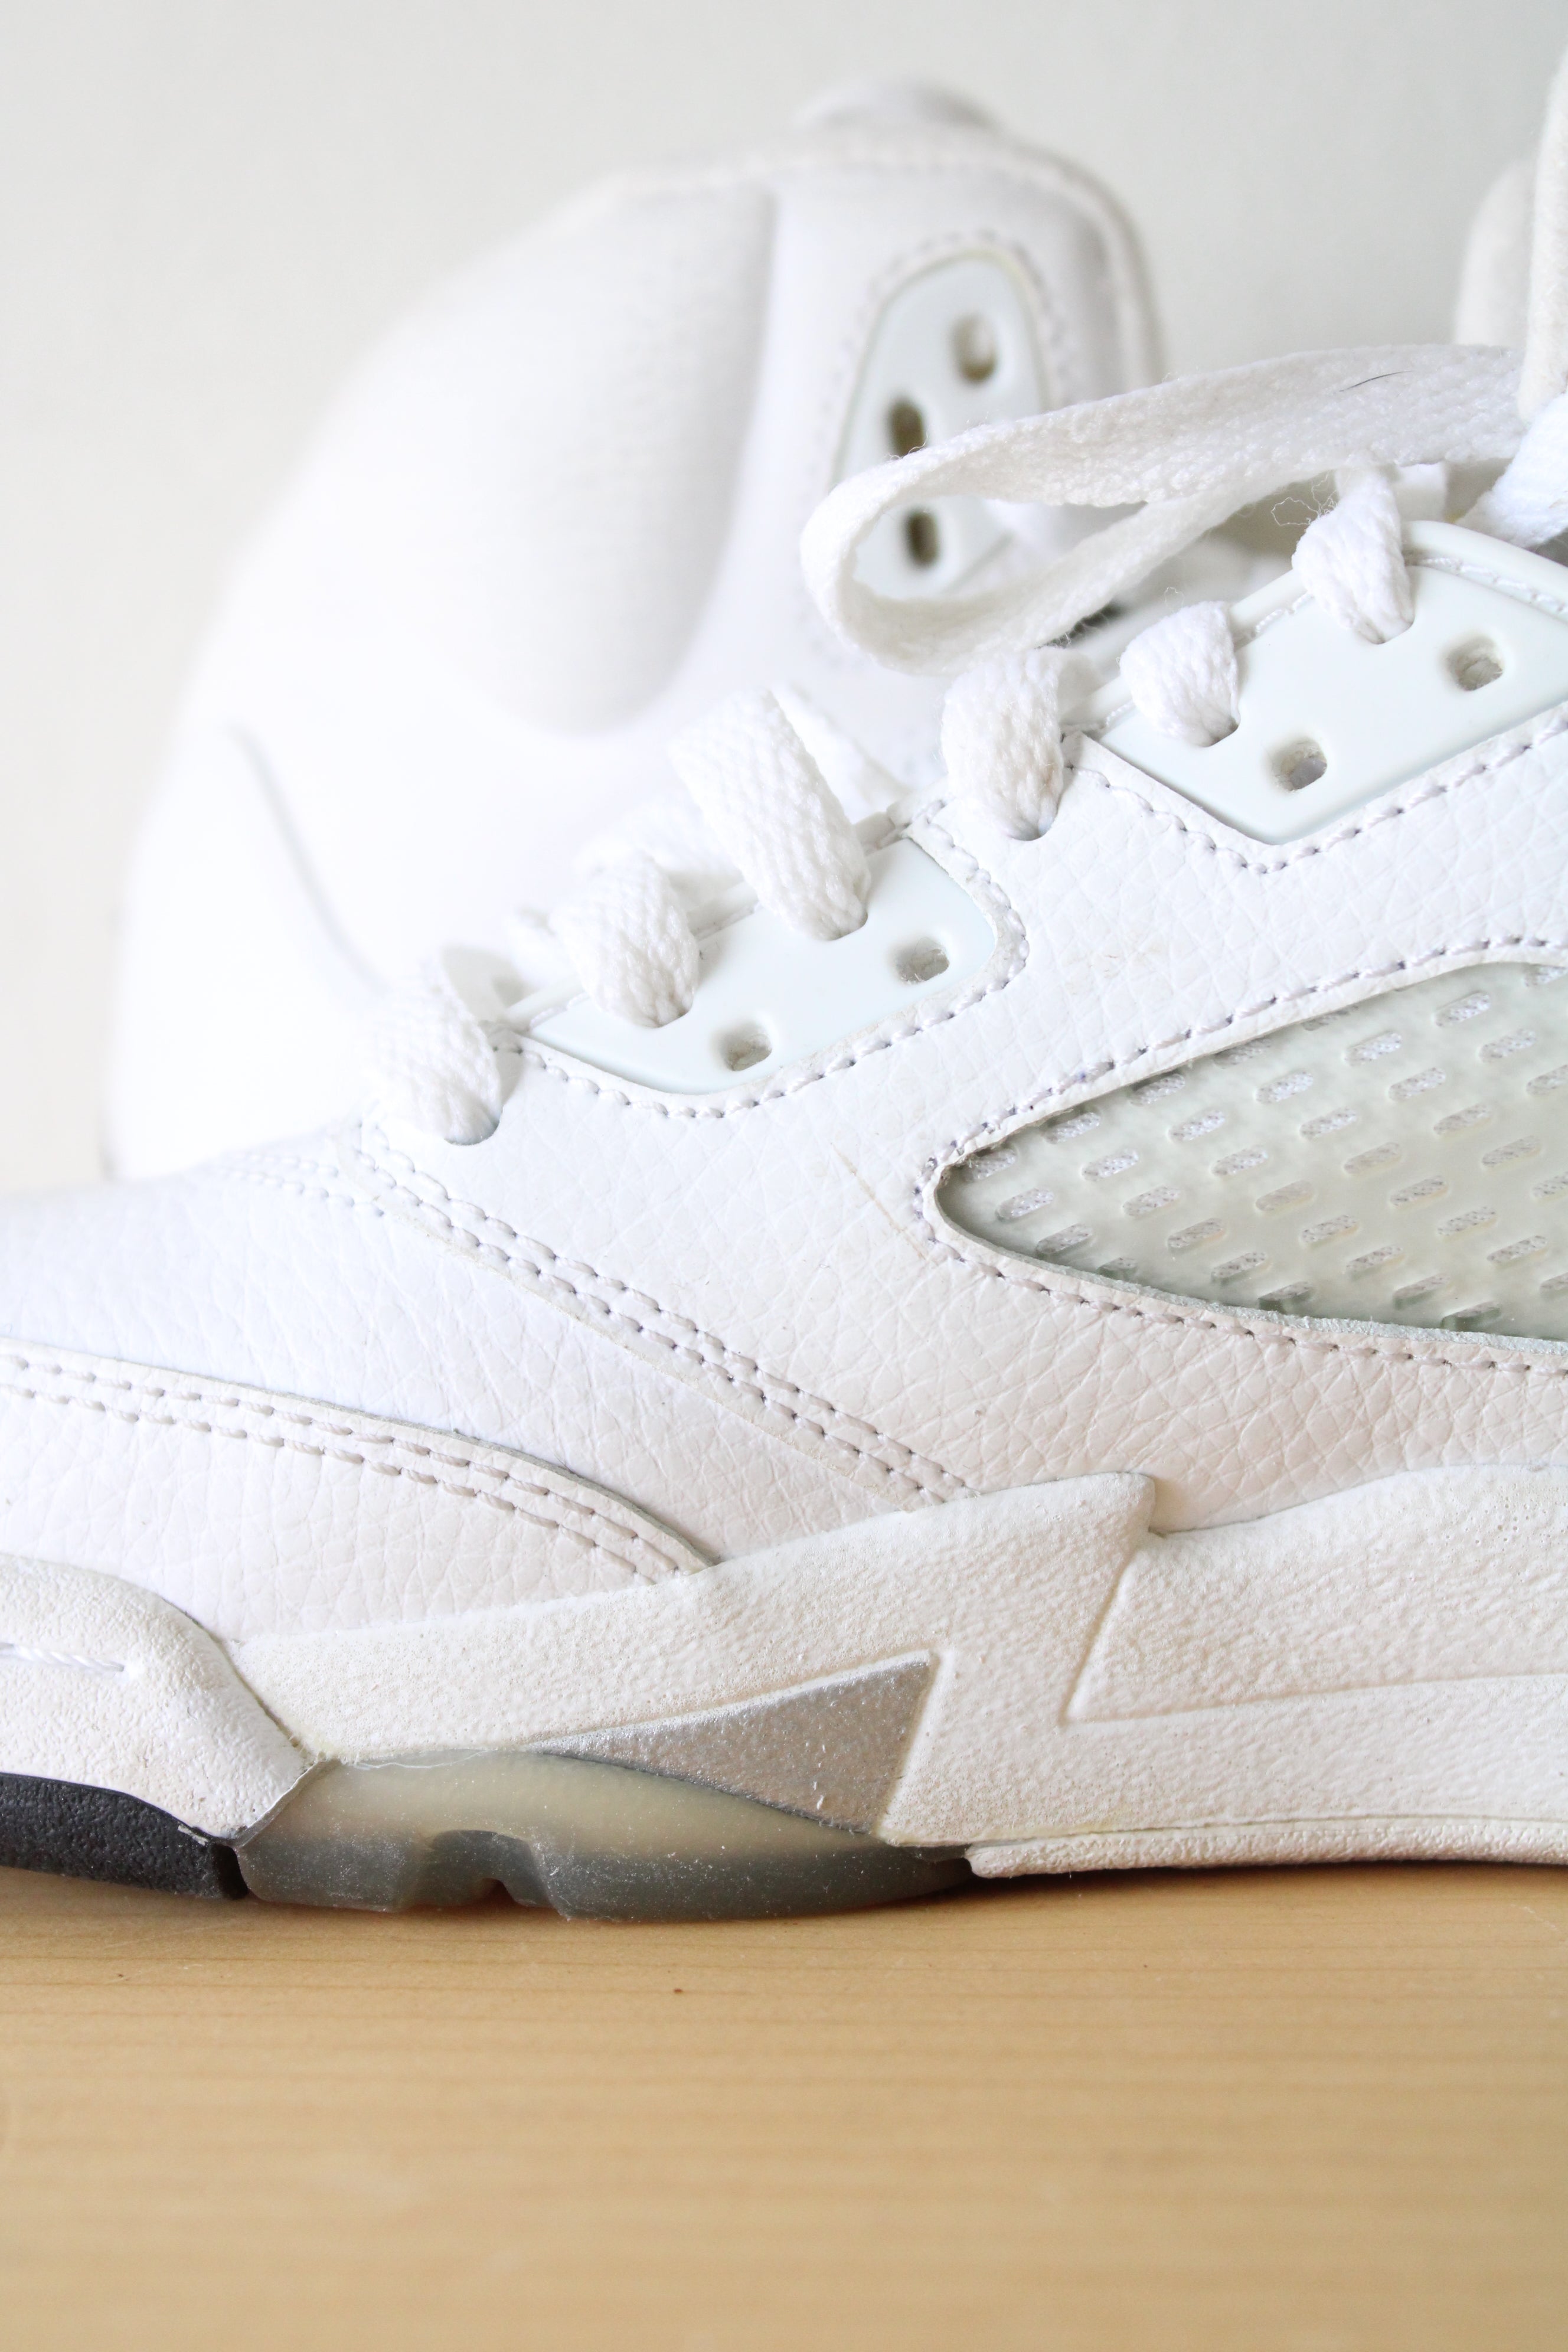 Air Jordan 5 Retro 2015 Metallic White Sneakers | Size 4